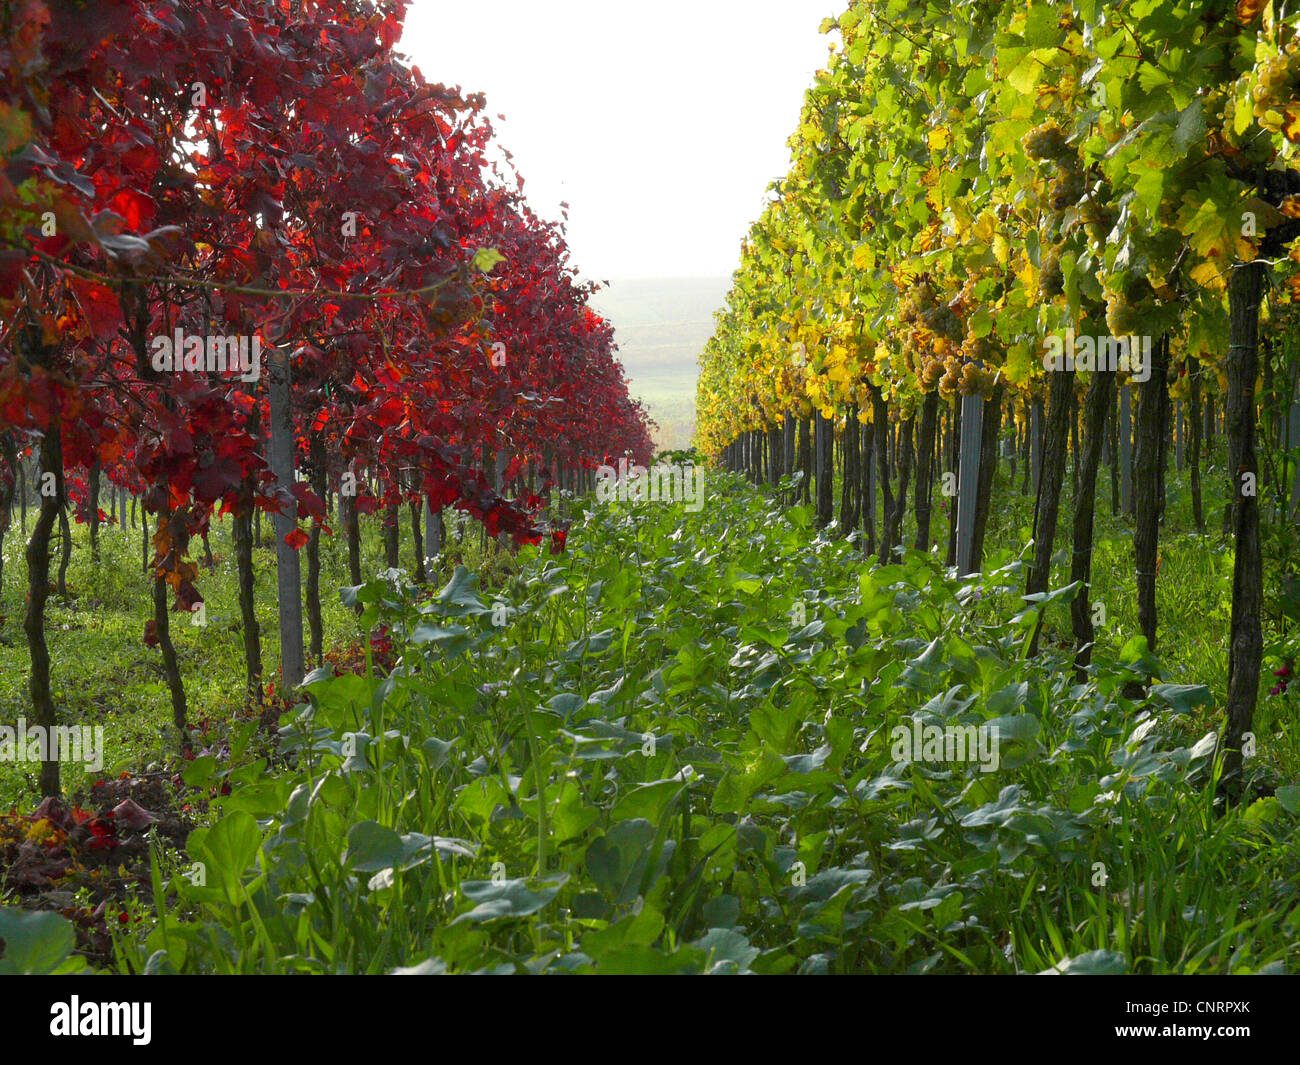 grape-vine, vine (Vitis vinifera), grapevines in autumn, Germany, Rhineland-Palatinate Stock Photo